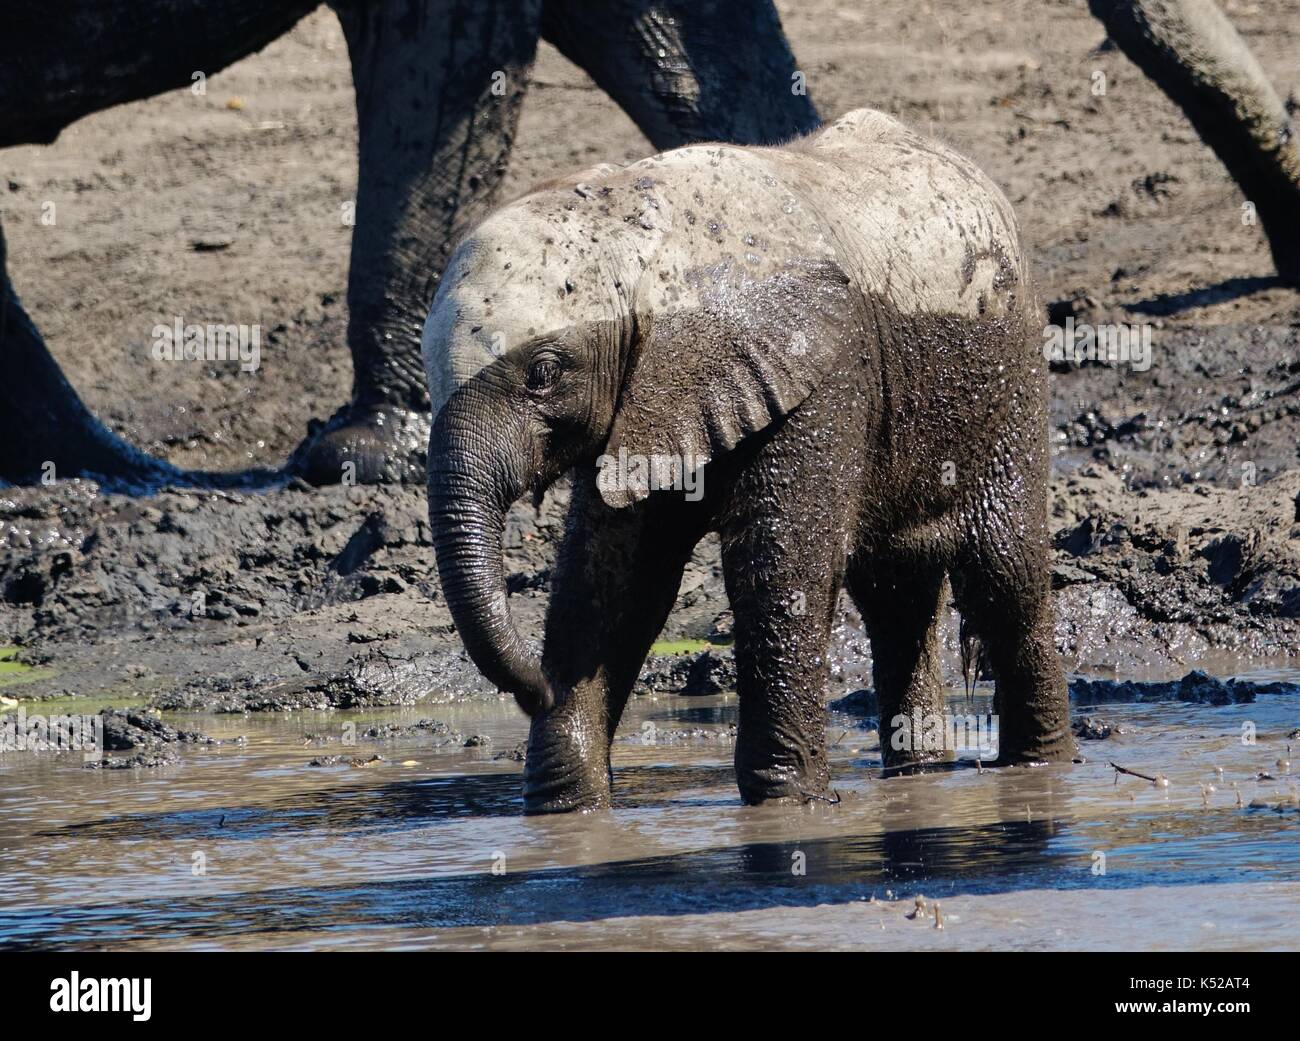 Baby elephant in mud bath Stock Photo